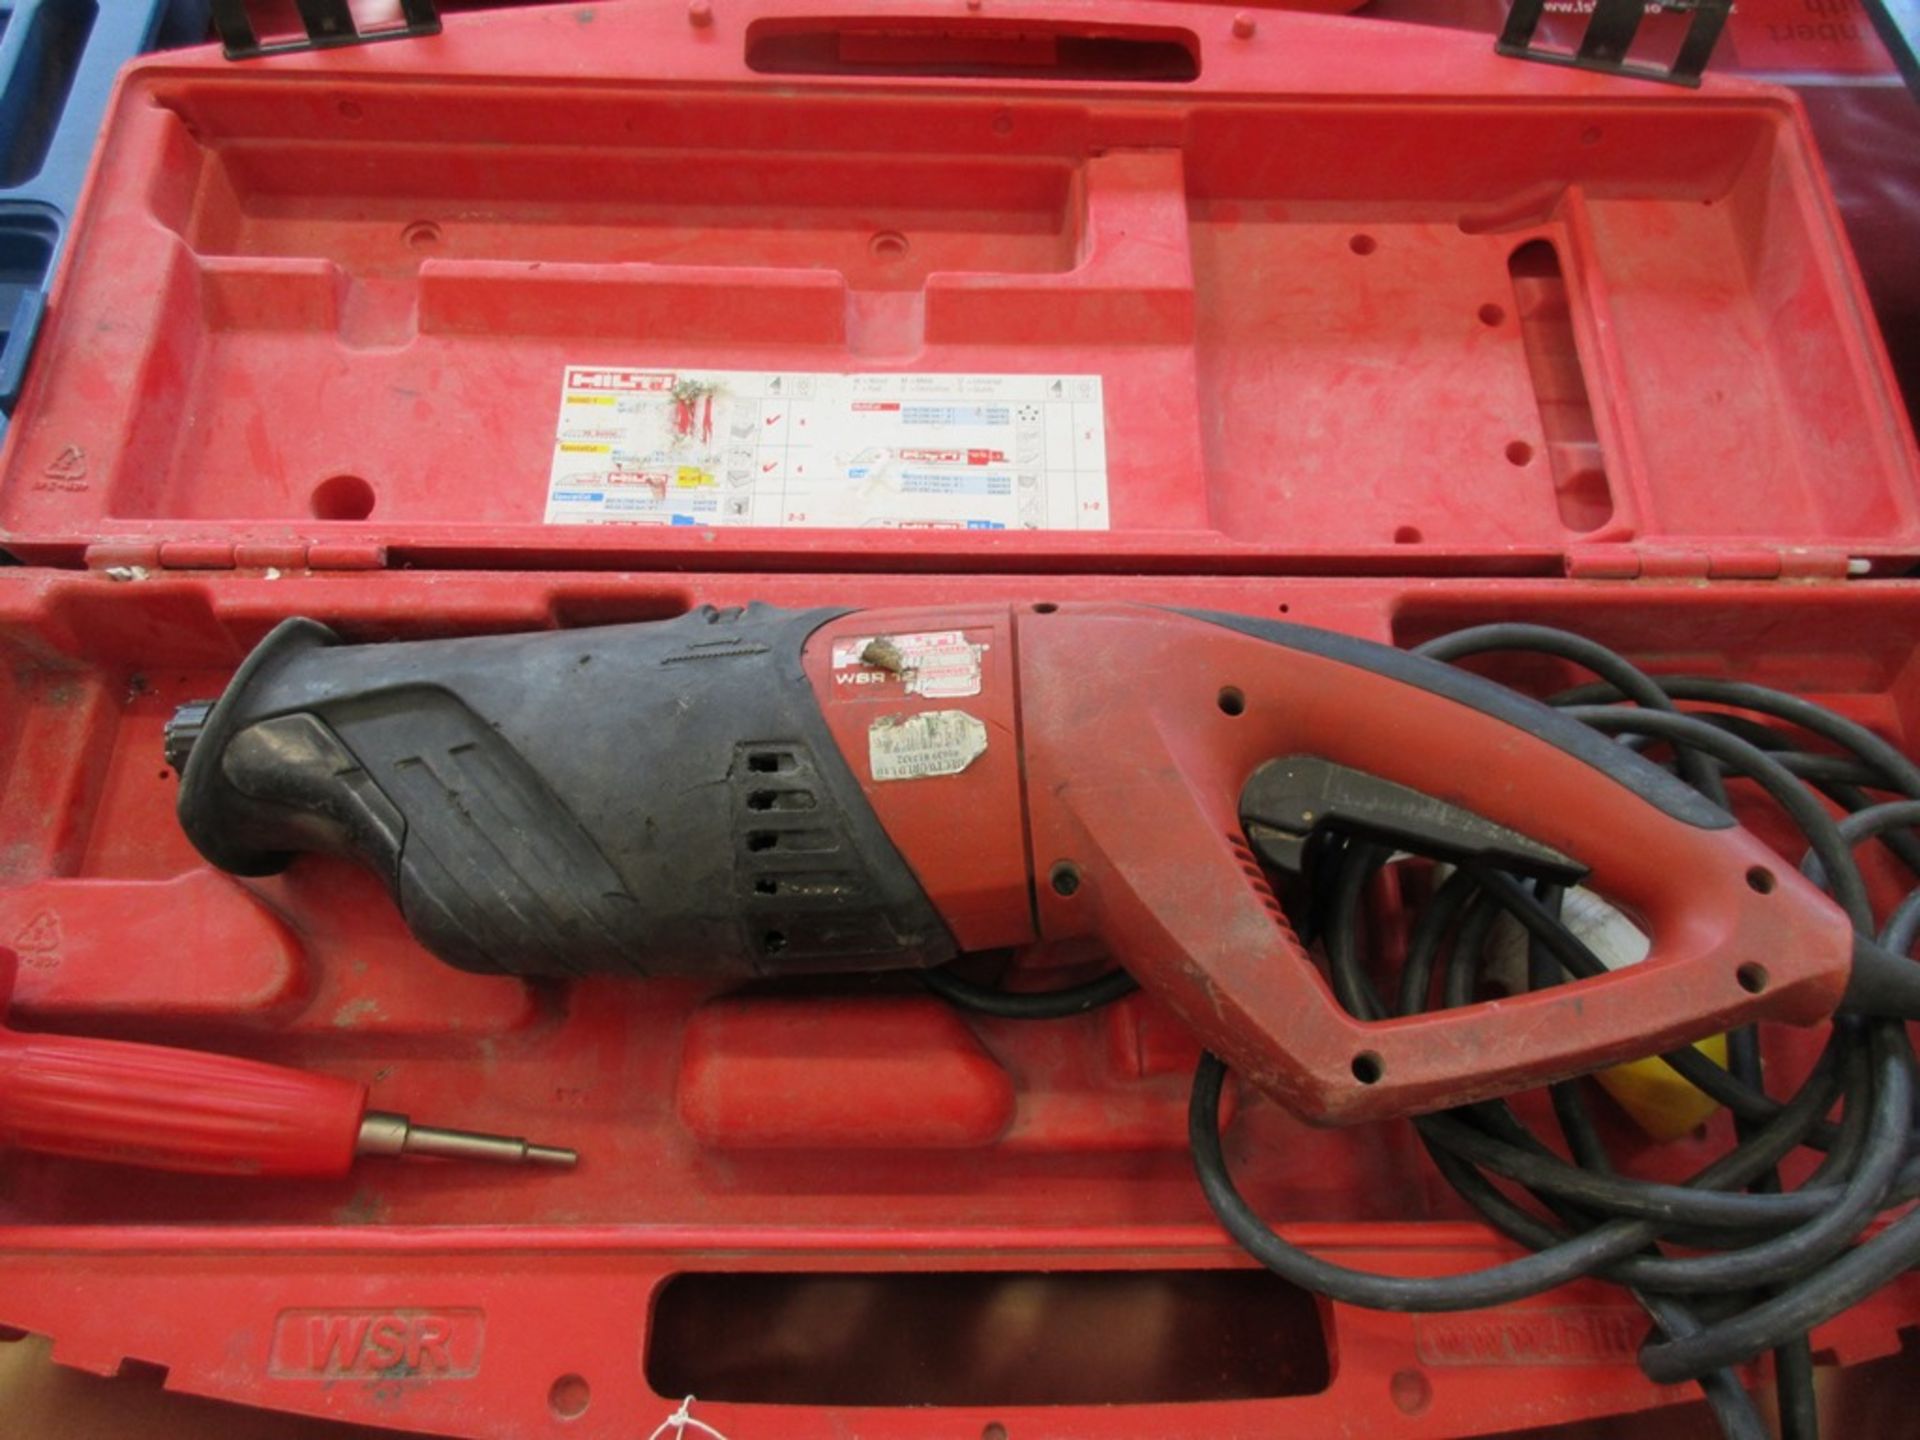 Hilti WSR 1200 PE Reciprocating saw